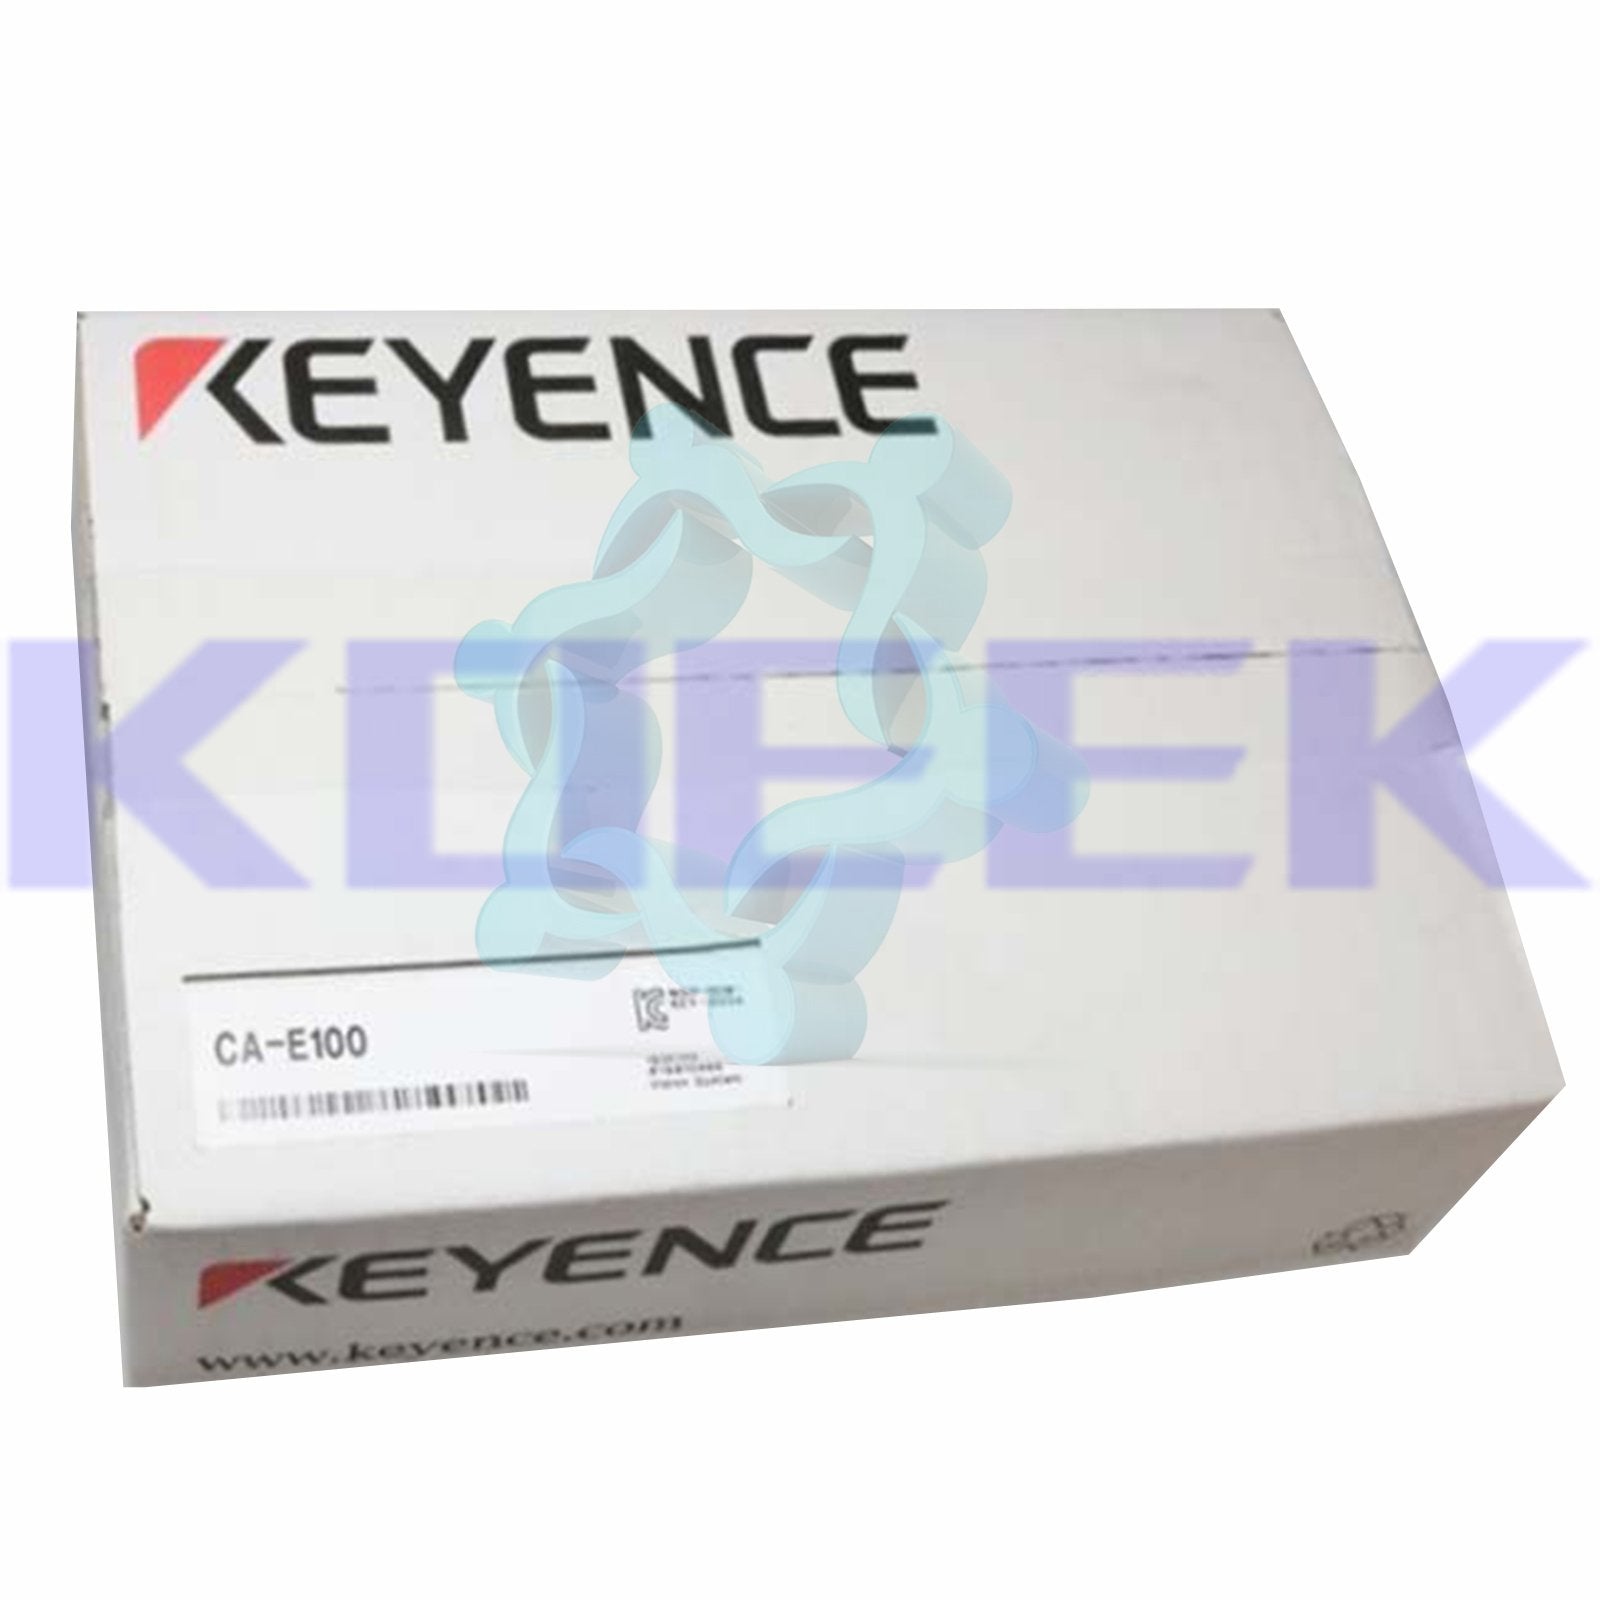 CA-E100 KOEED 500+, import_2020_10_10_031751, Keyence, NEW, Other